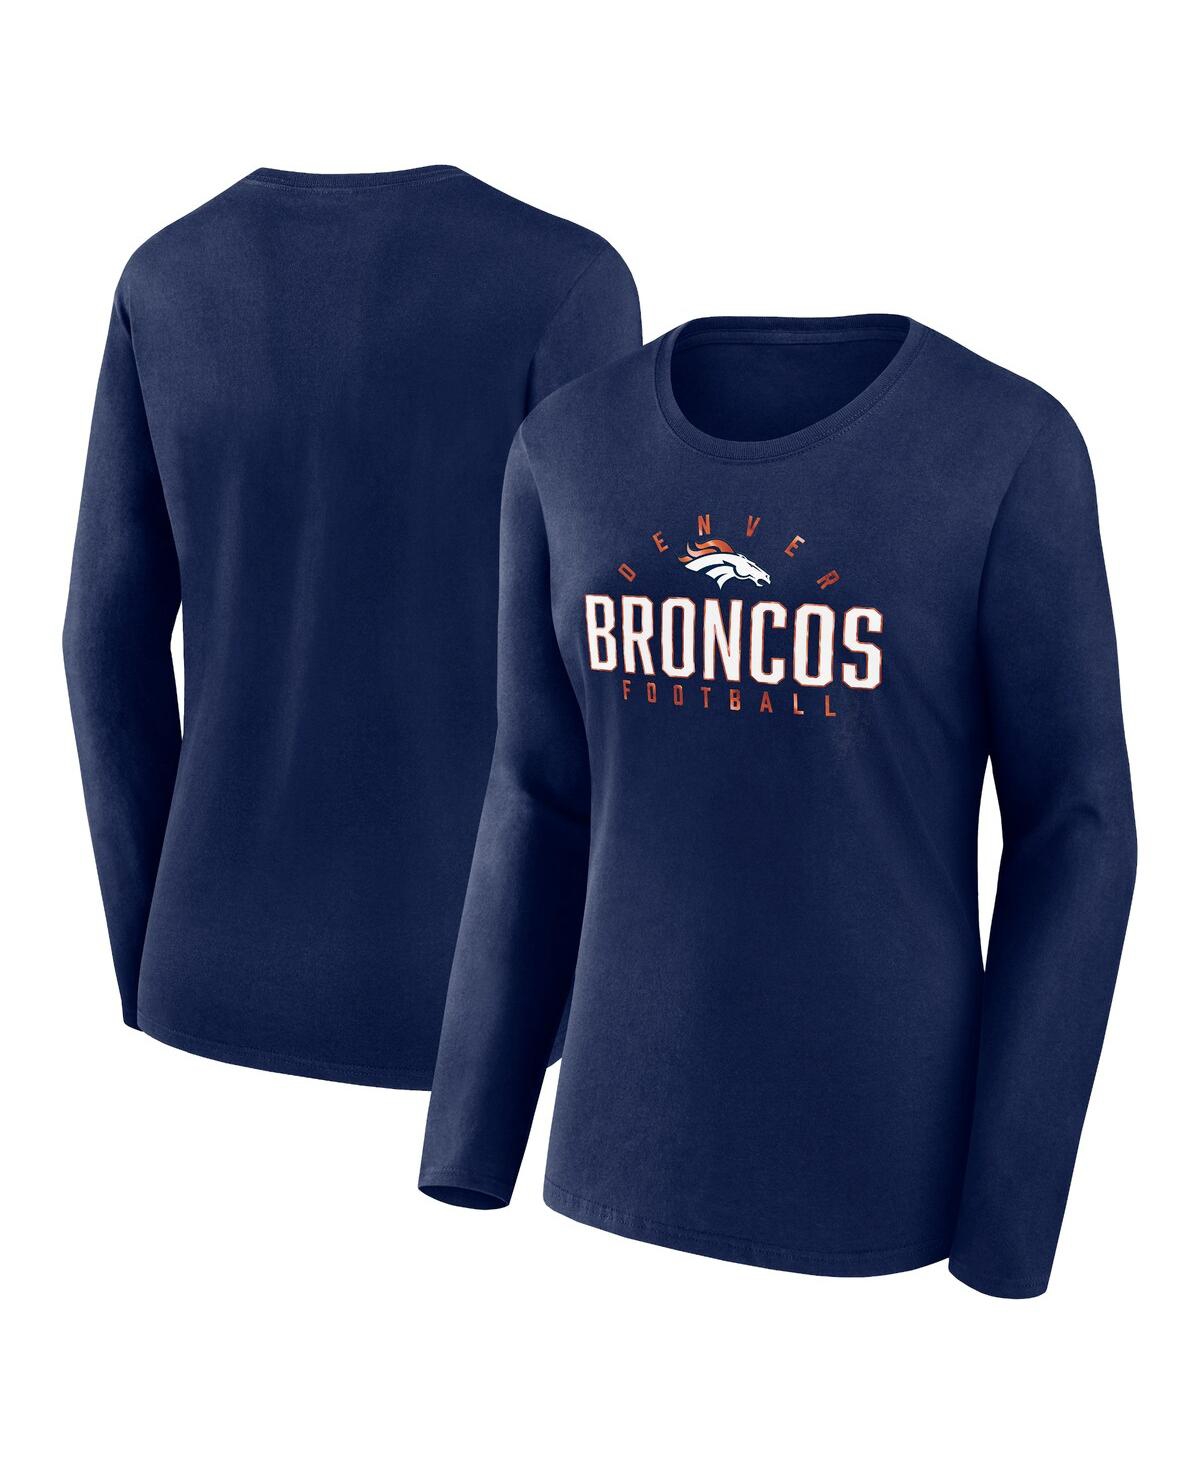 Shop Fanatics Women's  Navy Denver Broncos Plus Size Foiled Play Long Sleeve T-shirt